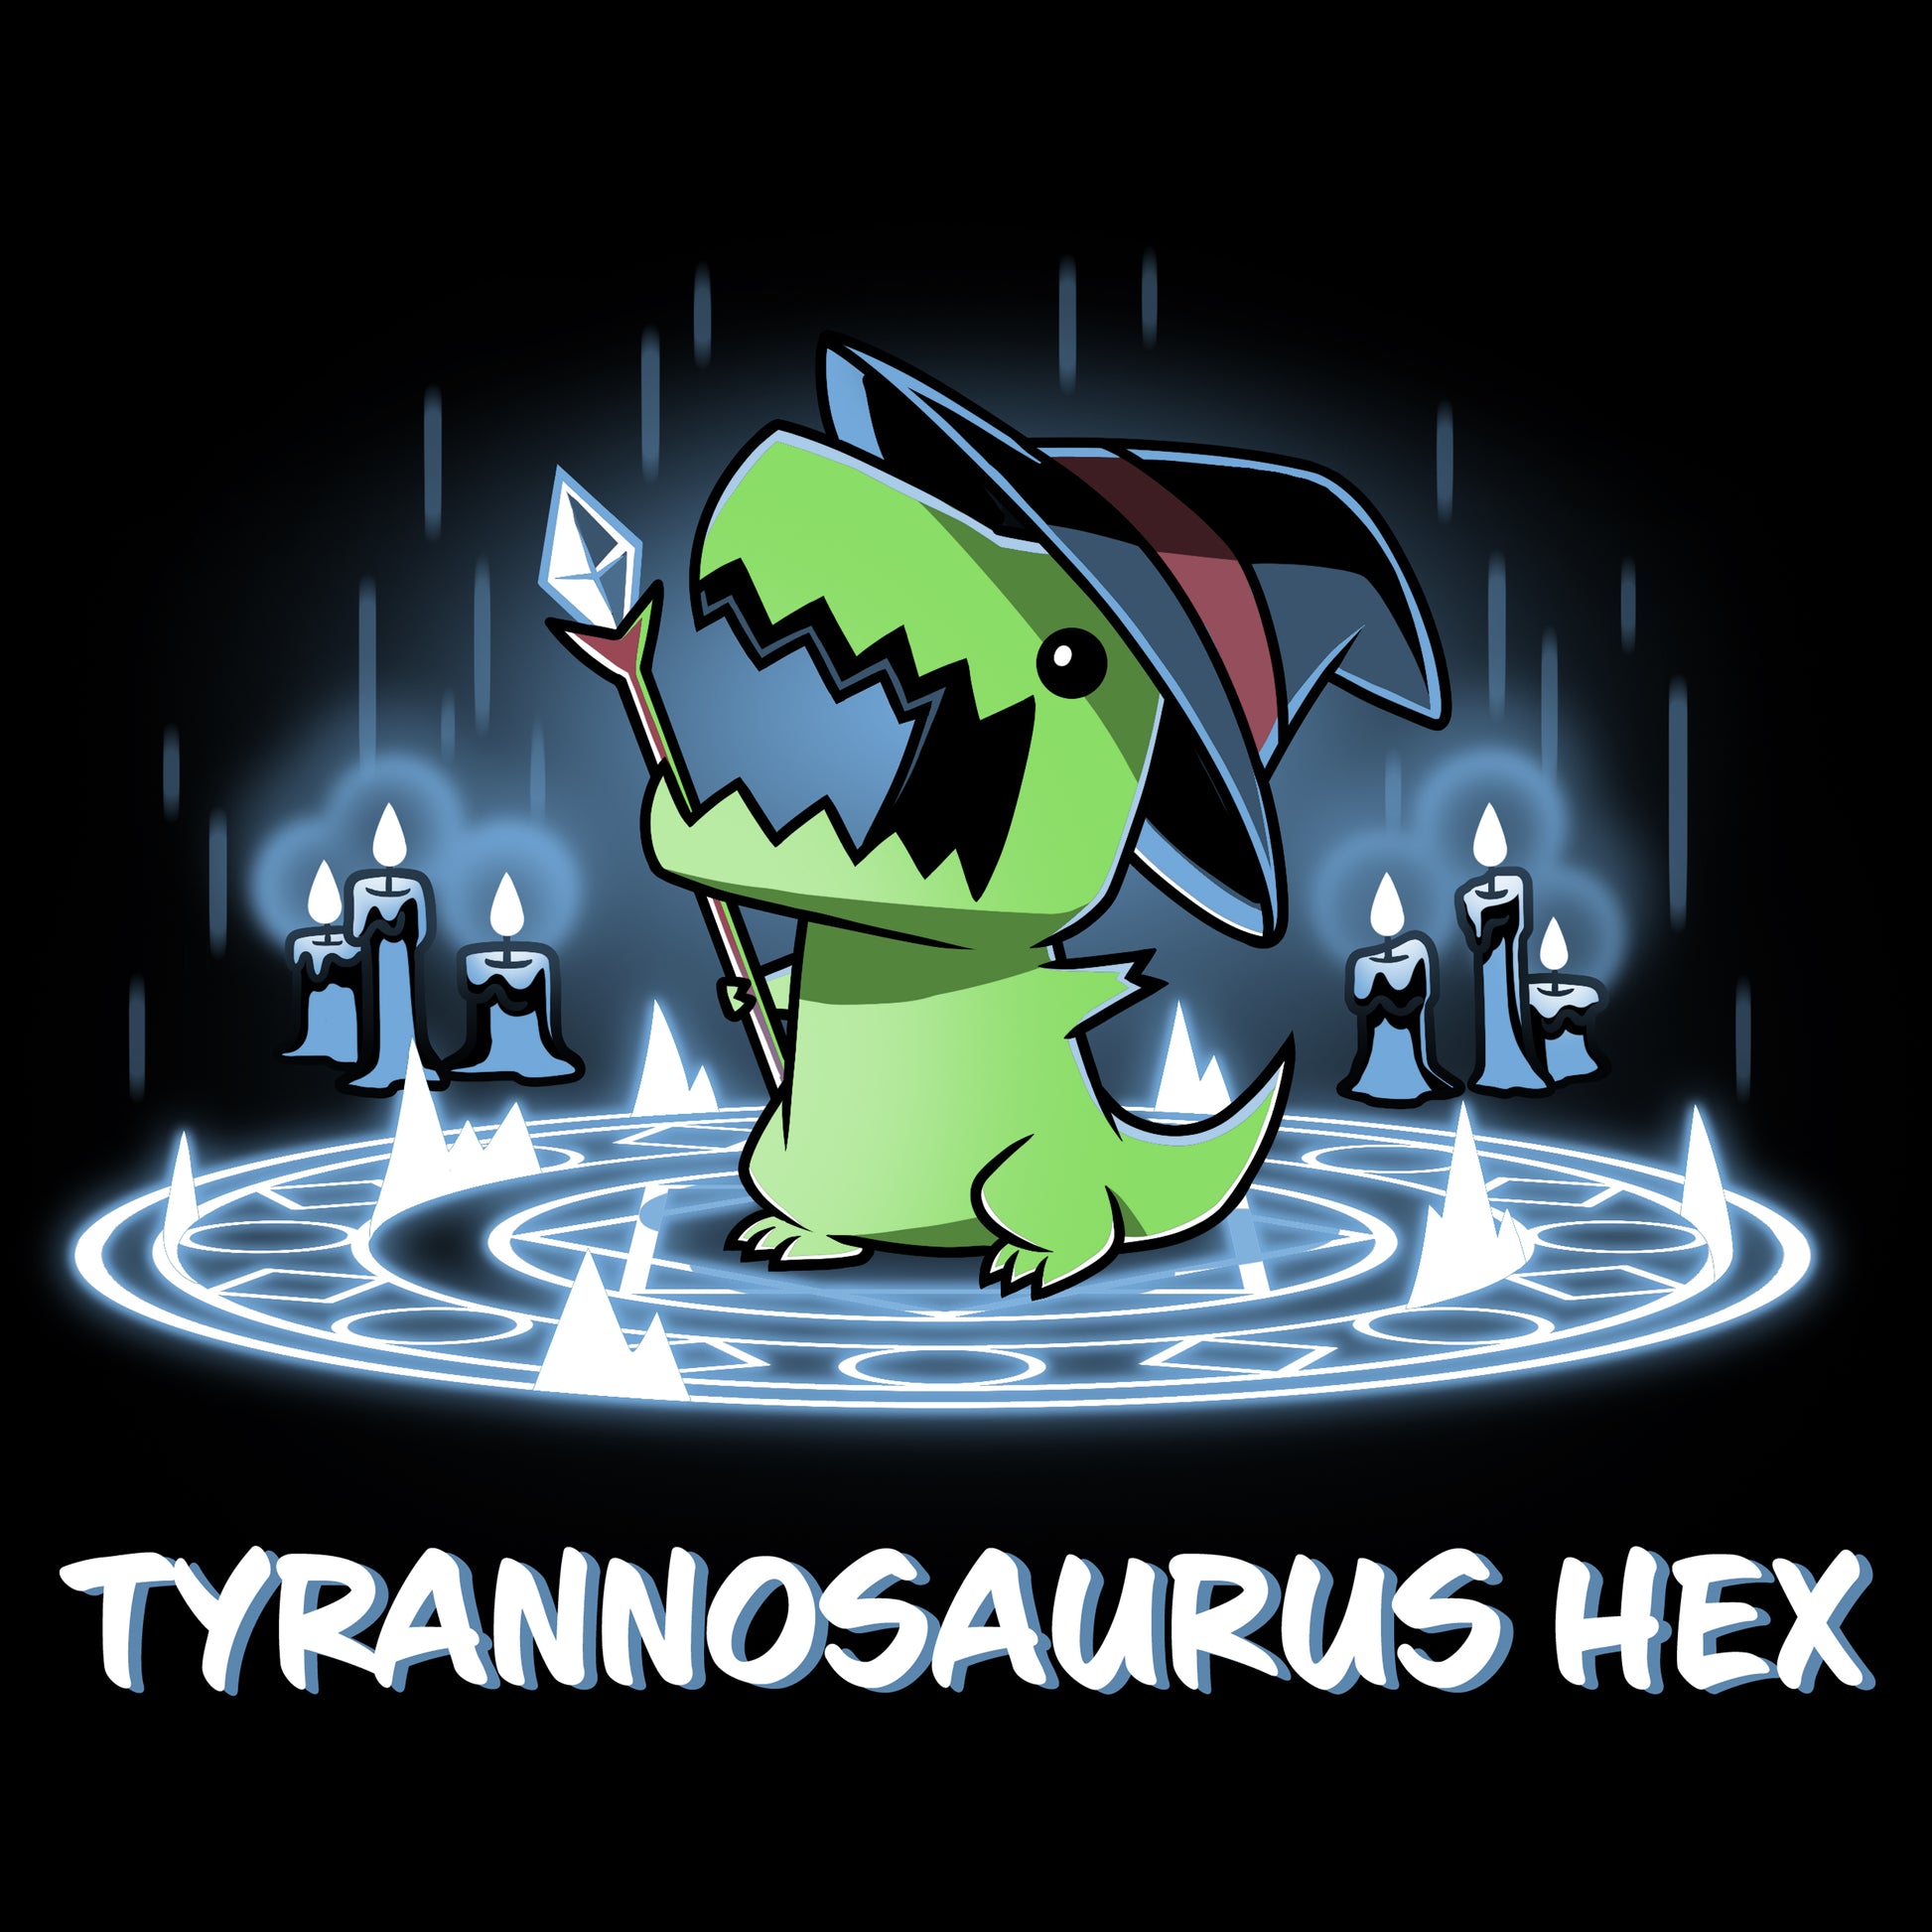 TeeTurtle's Tyrannosaurus Hex casts a spell summoning apocalyptic meteors.